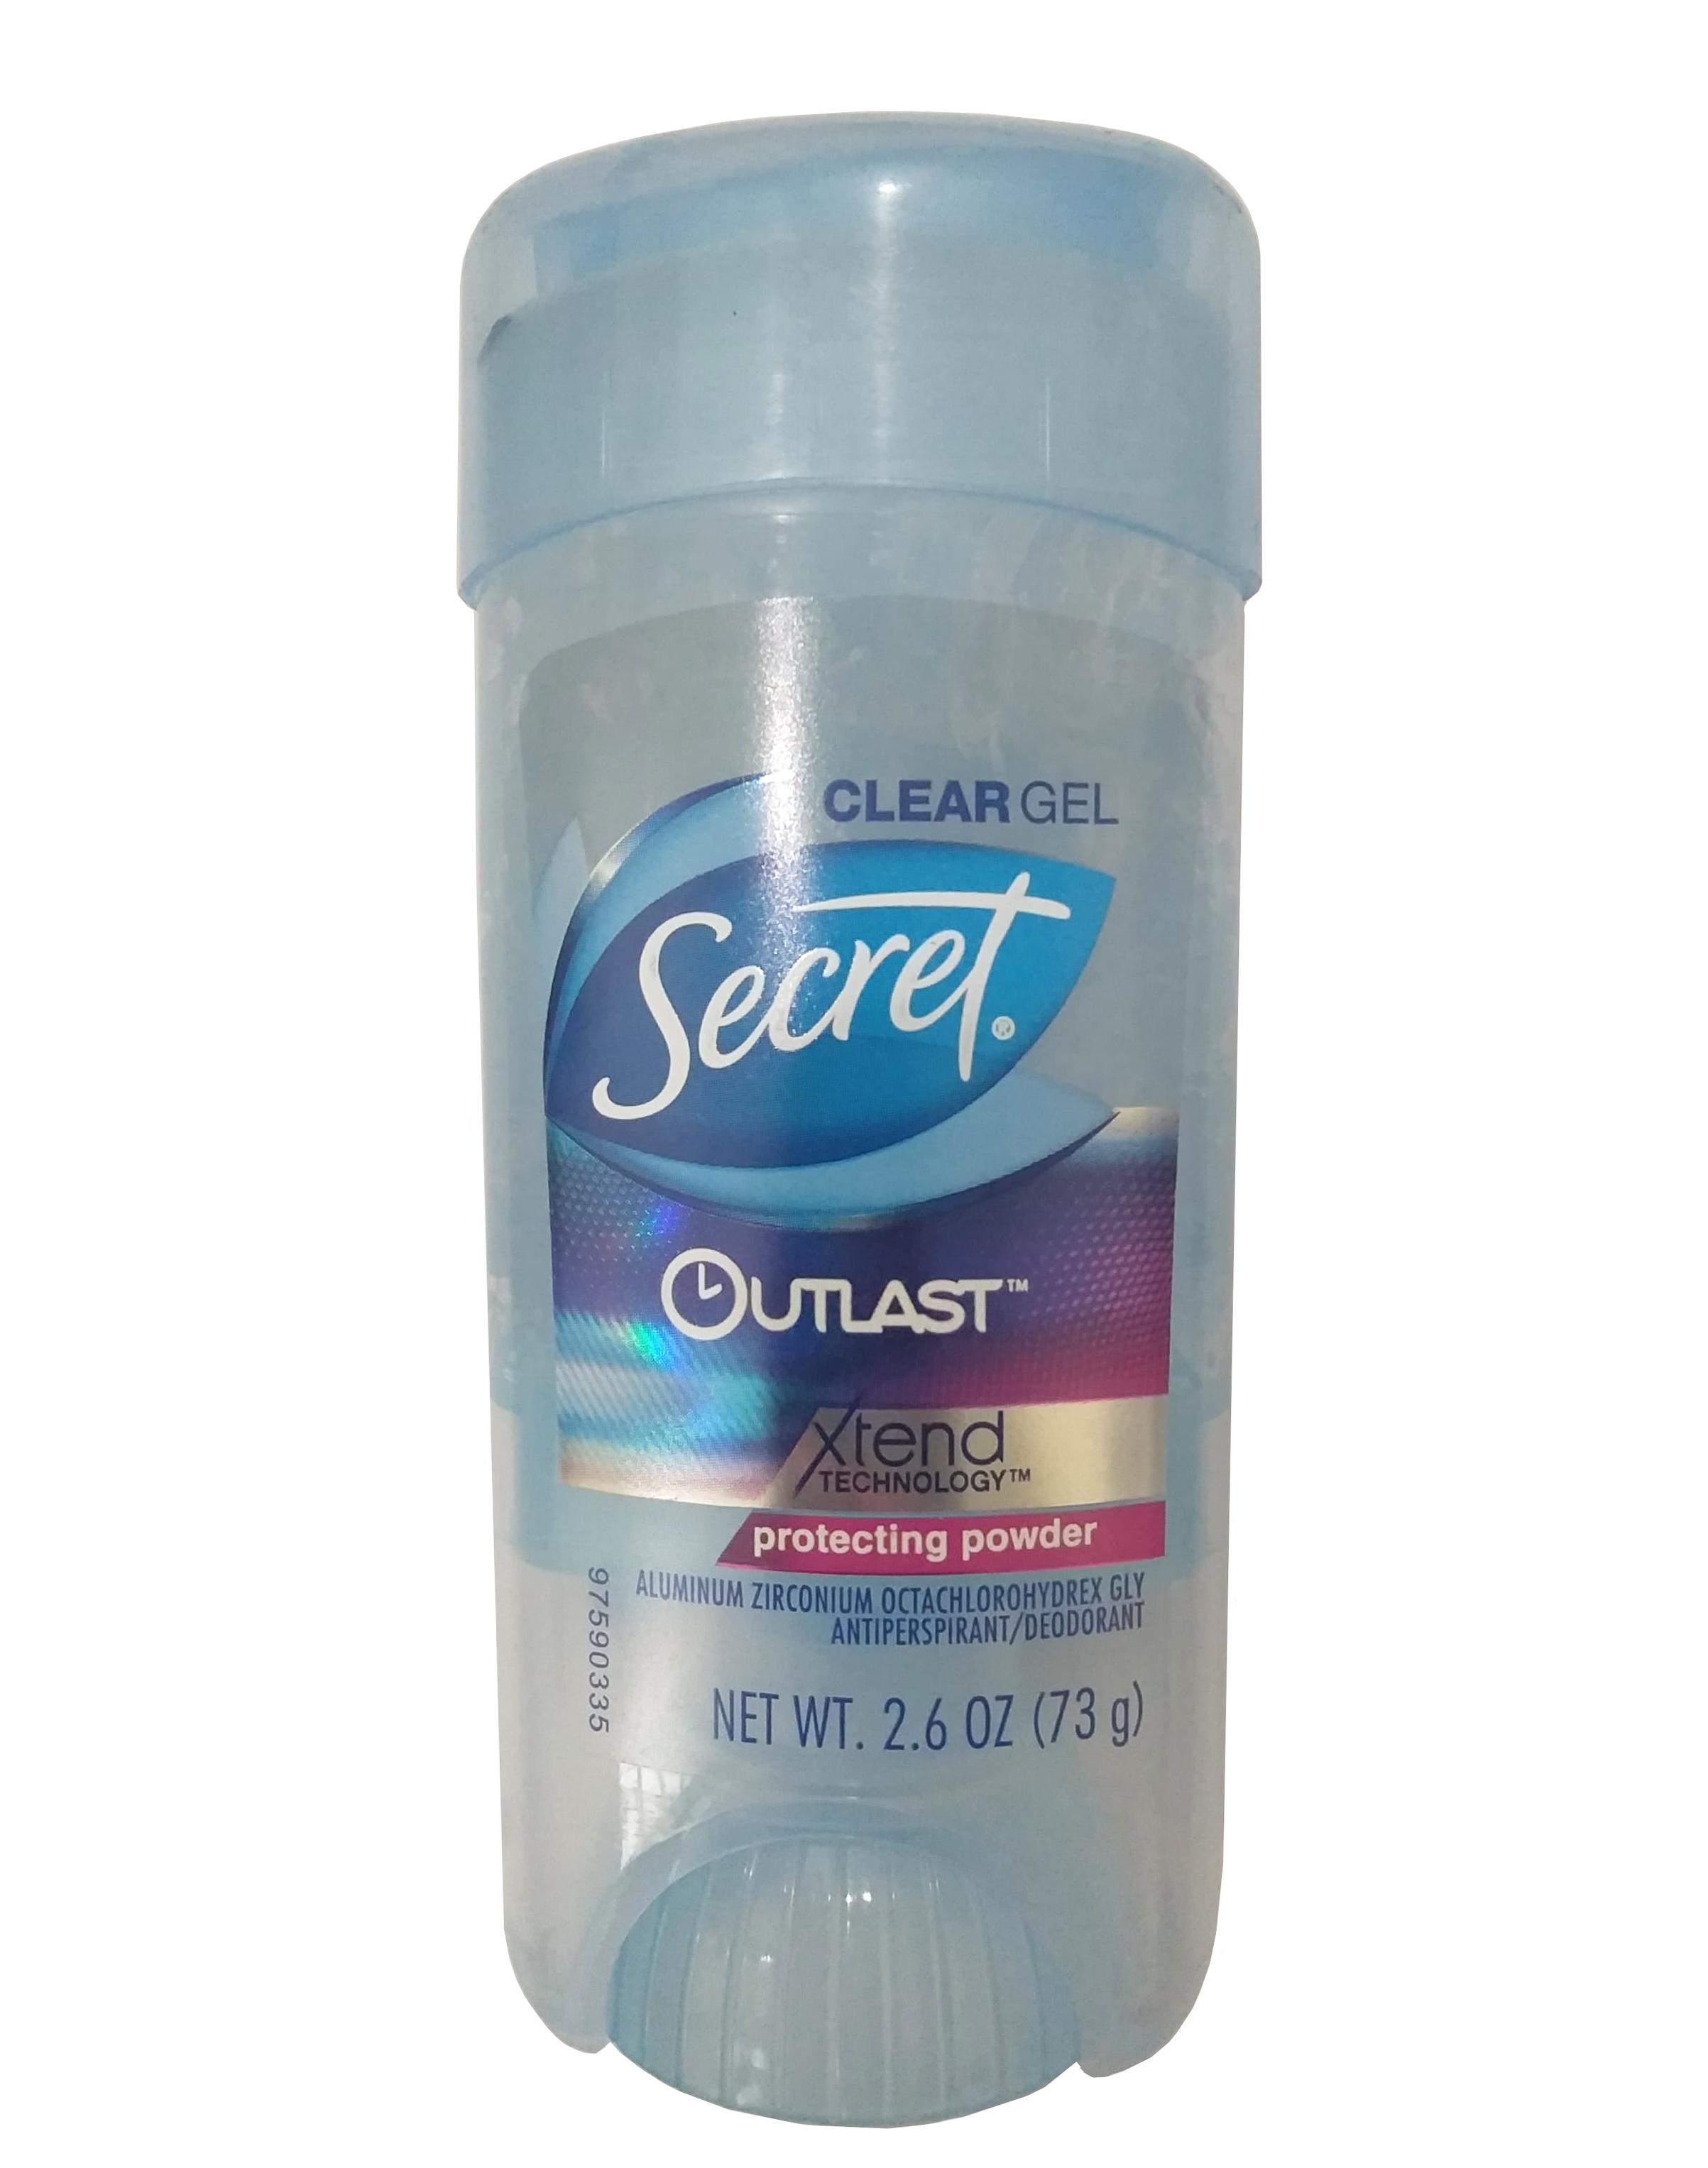 Lăn Khử Mùi Secret Clear Gel Outlast Xtend Protecting Powder 73g